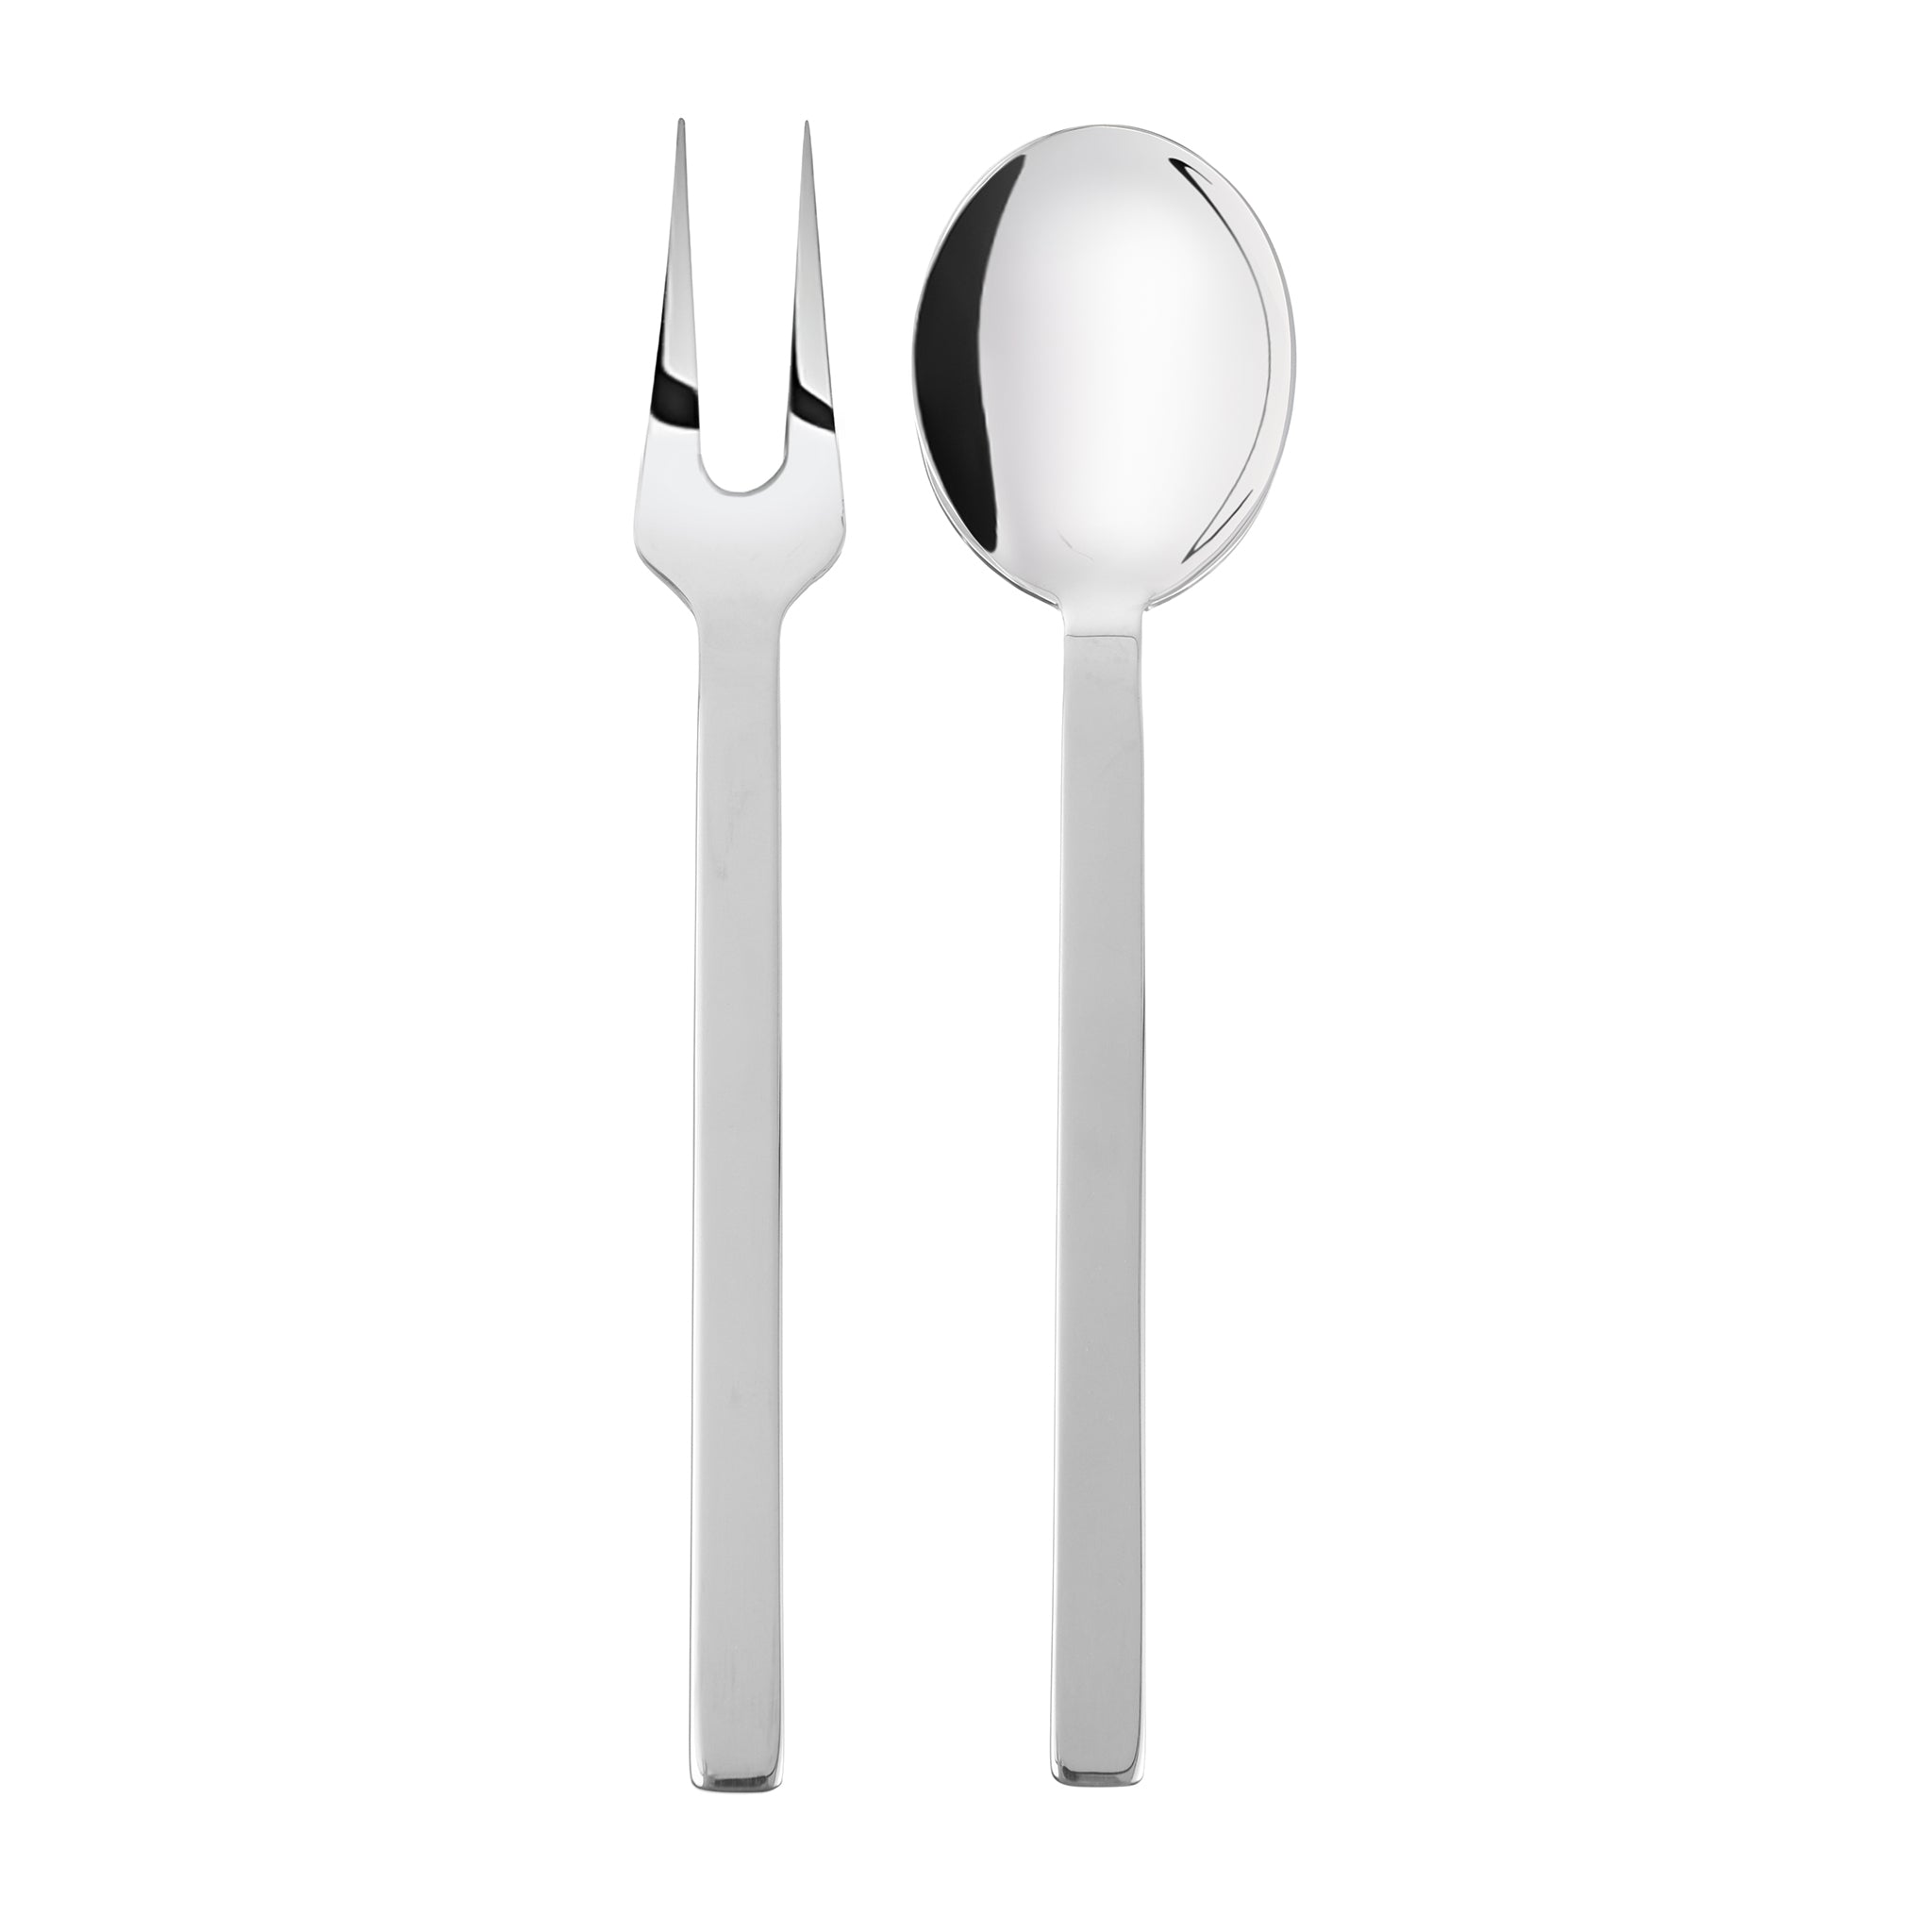 Mepra - Serving Spoon & Fork Set 2 Pieces - Stainless Steel - 100002147